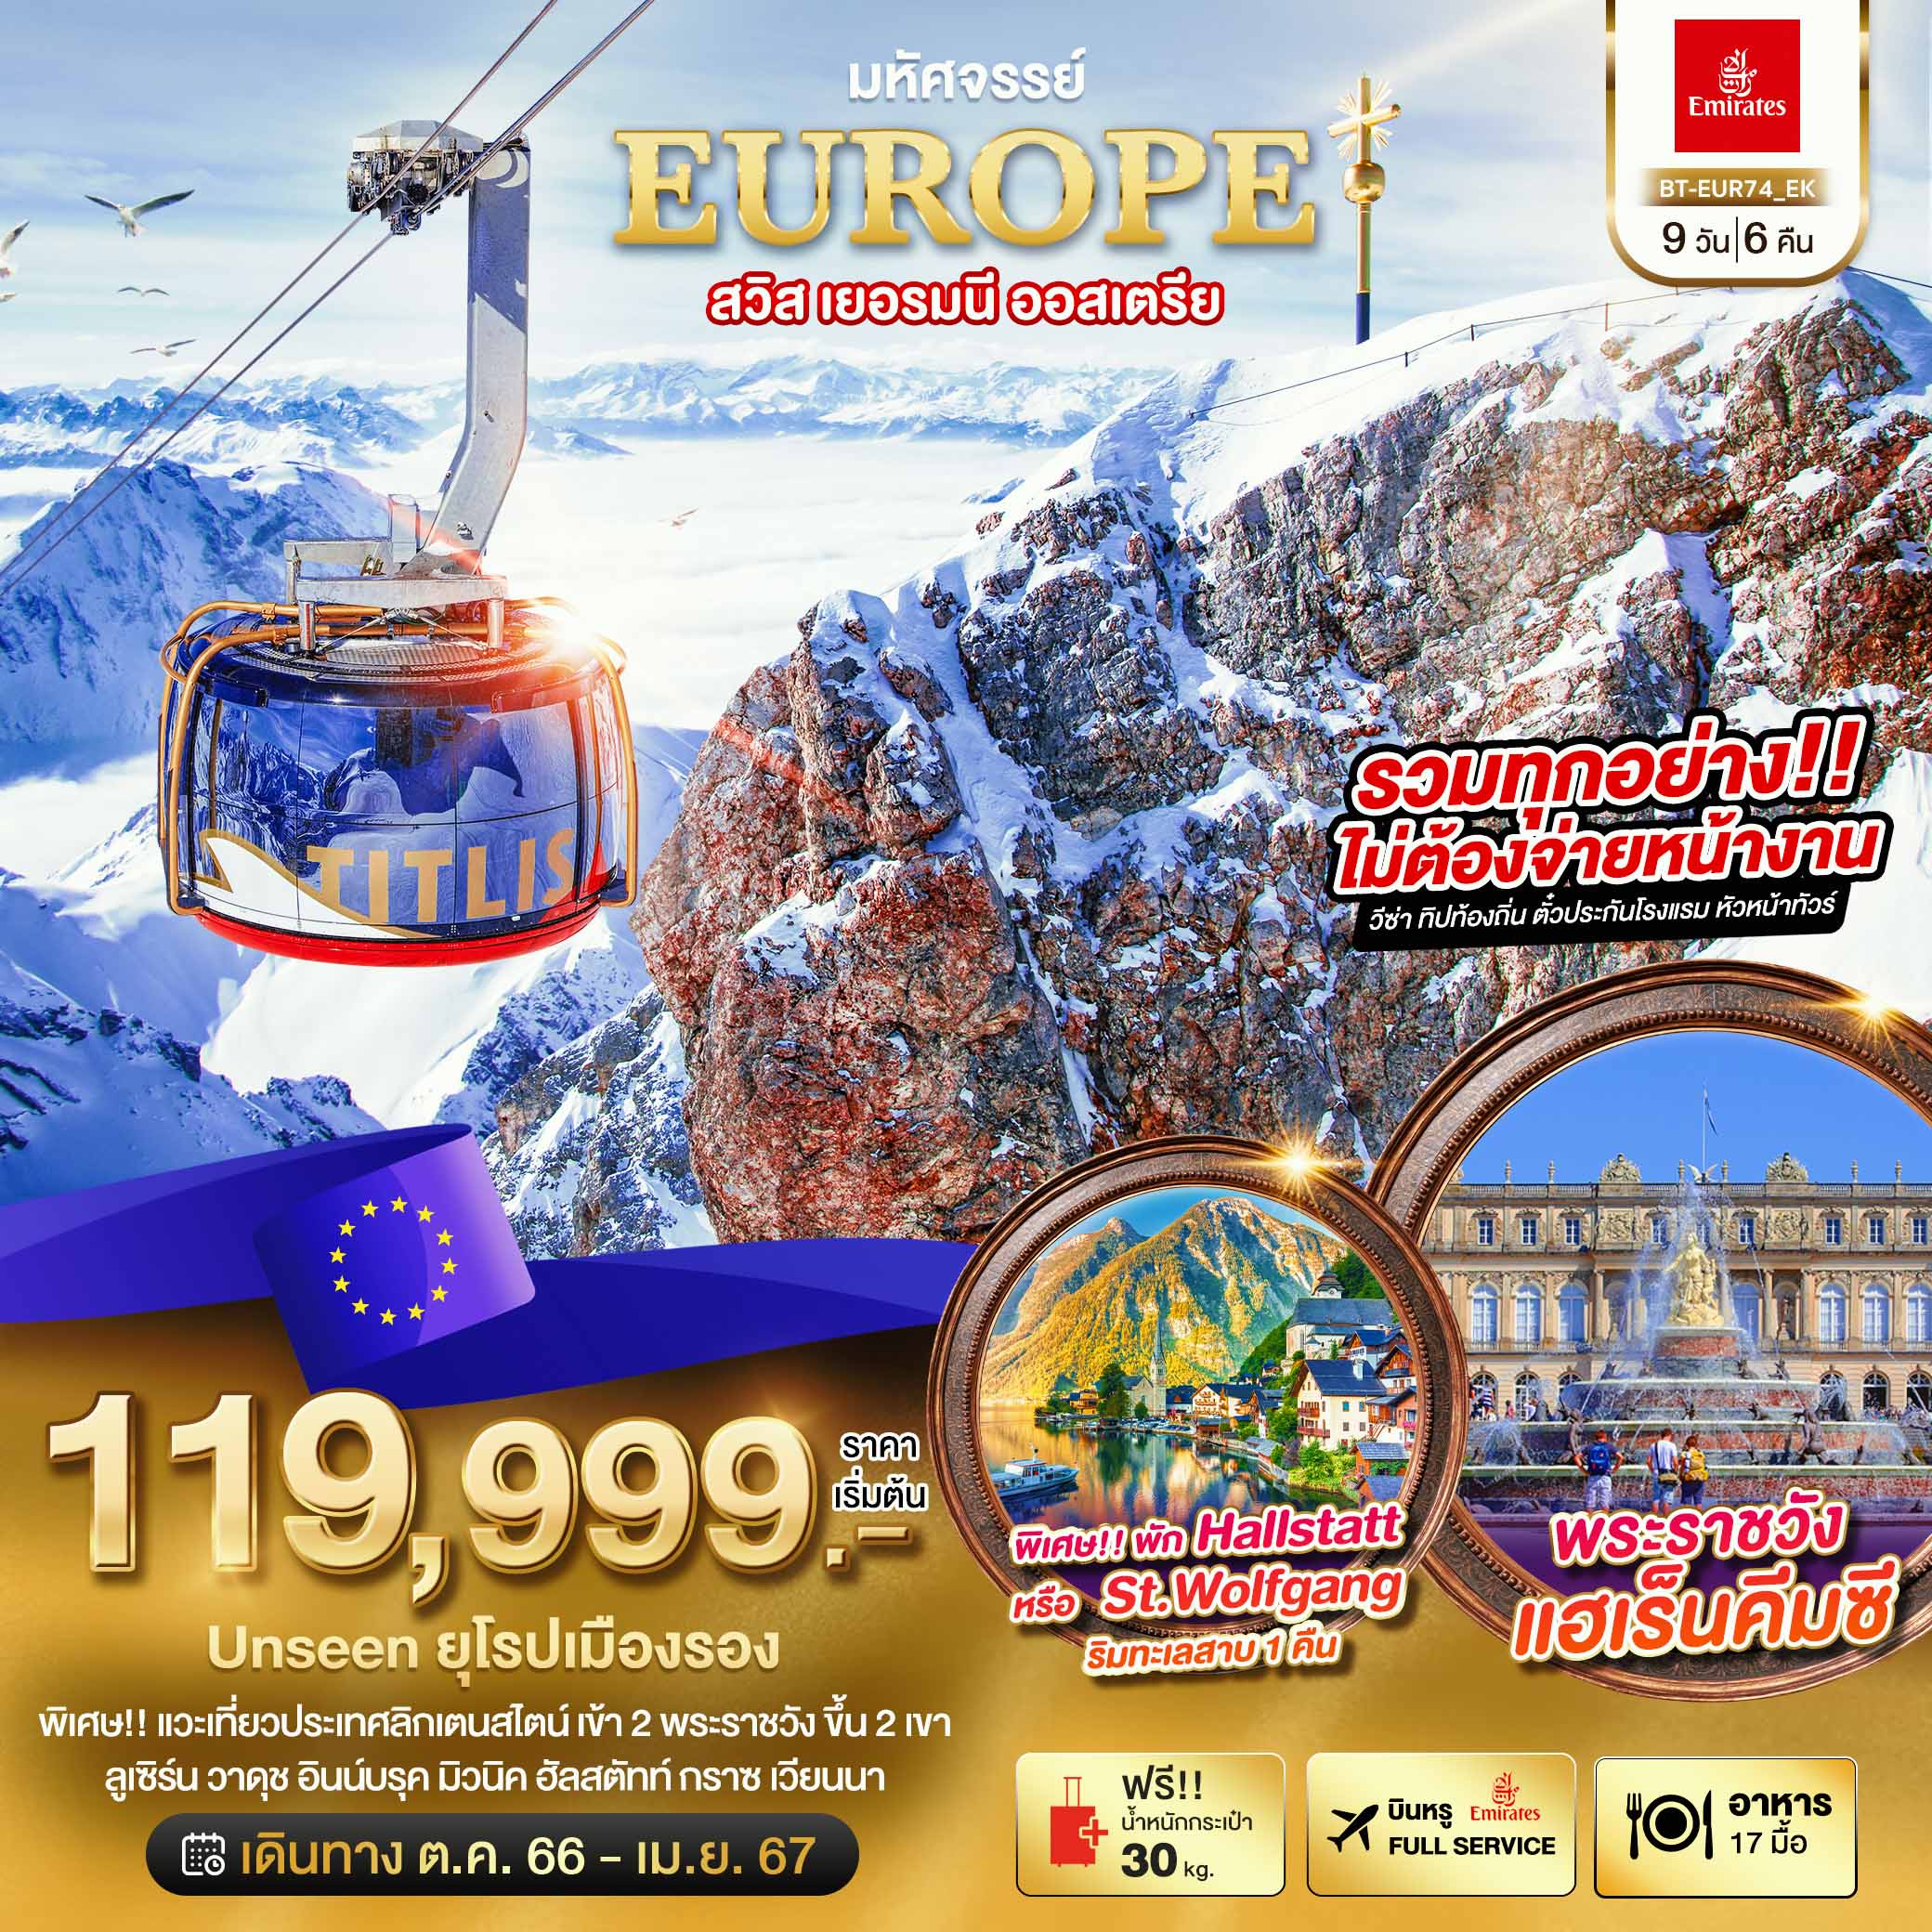 EUR05.01---BT-EUR74_ สวิส เยอรมนี ออสเตรีย Unseen ยุโรปเมือง